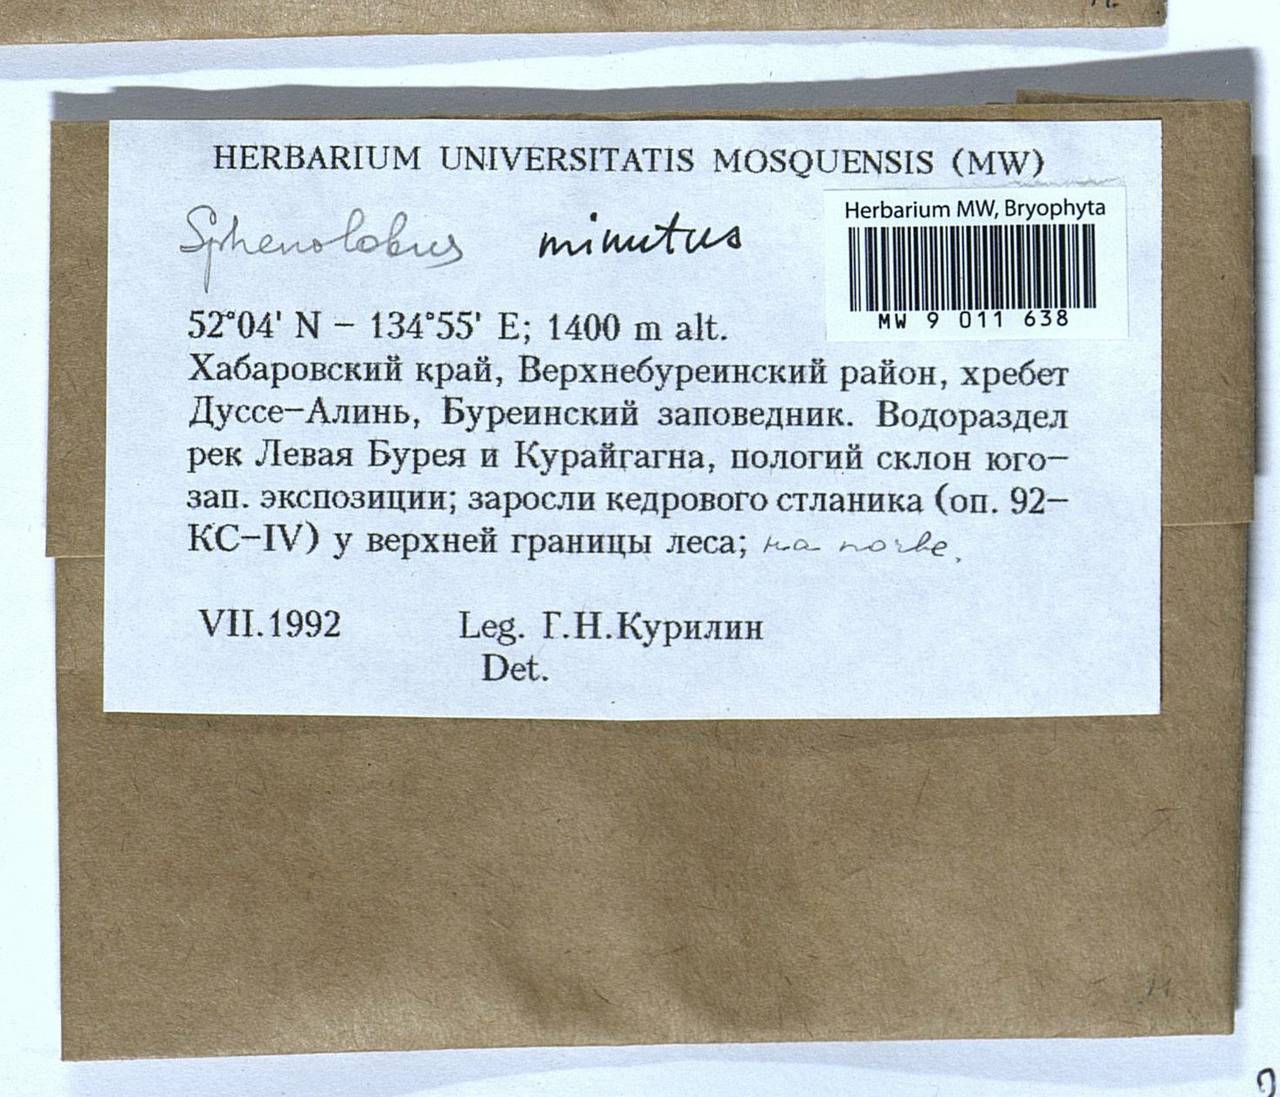 Sphenolobus minutus (Schreb. ex Cranz) Berggr., Bryophytes, Bryophytes - Russian Far East (excl. Chukotka & Kamchatka) (B20) (Russia)